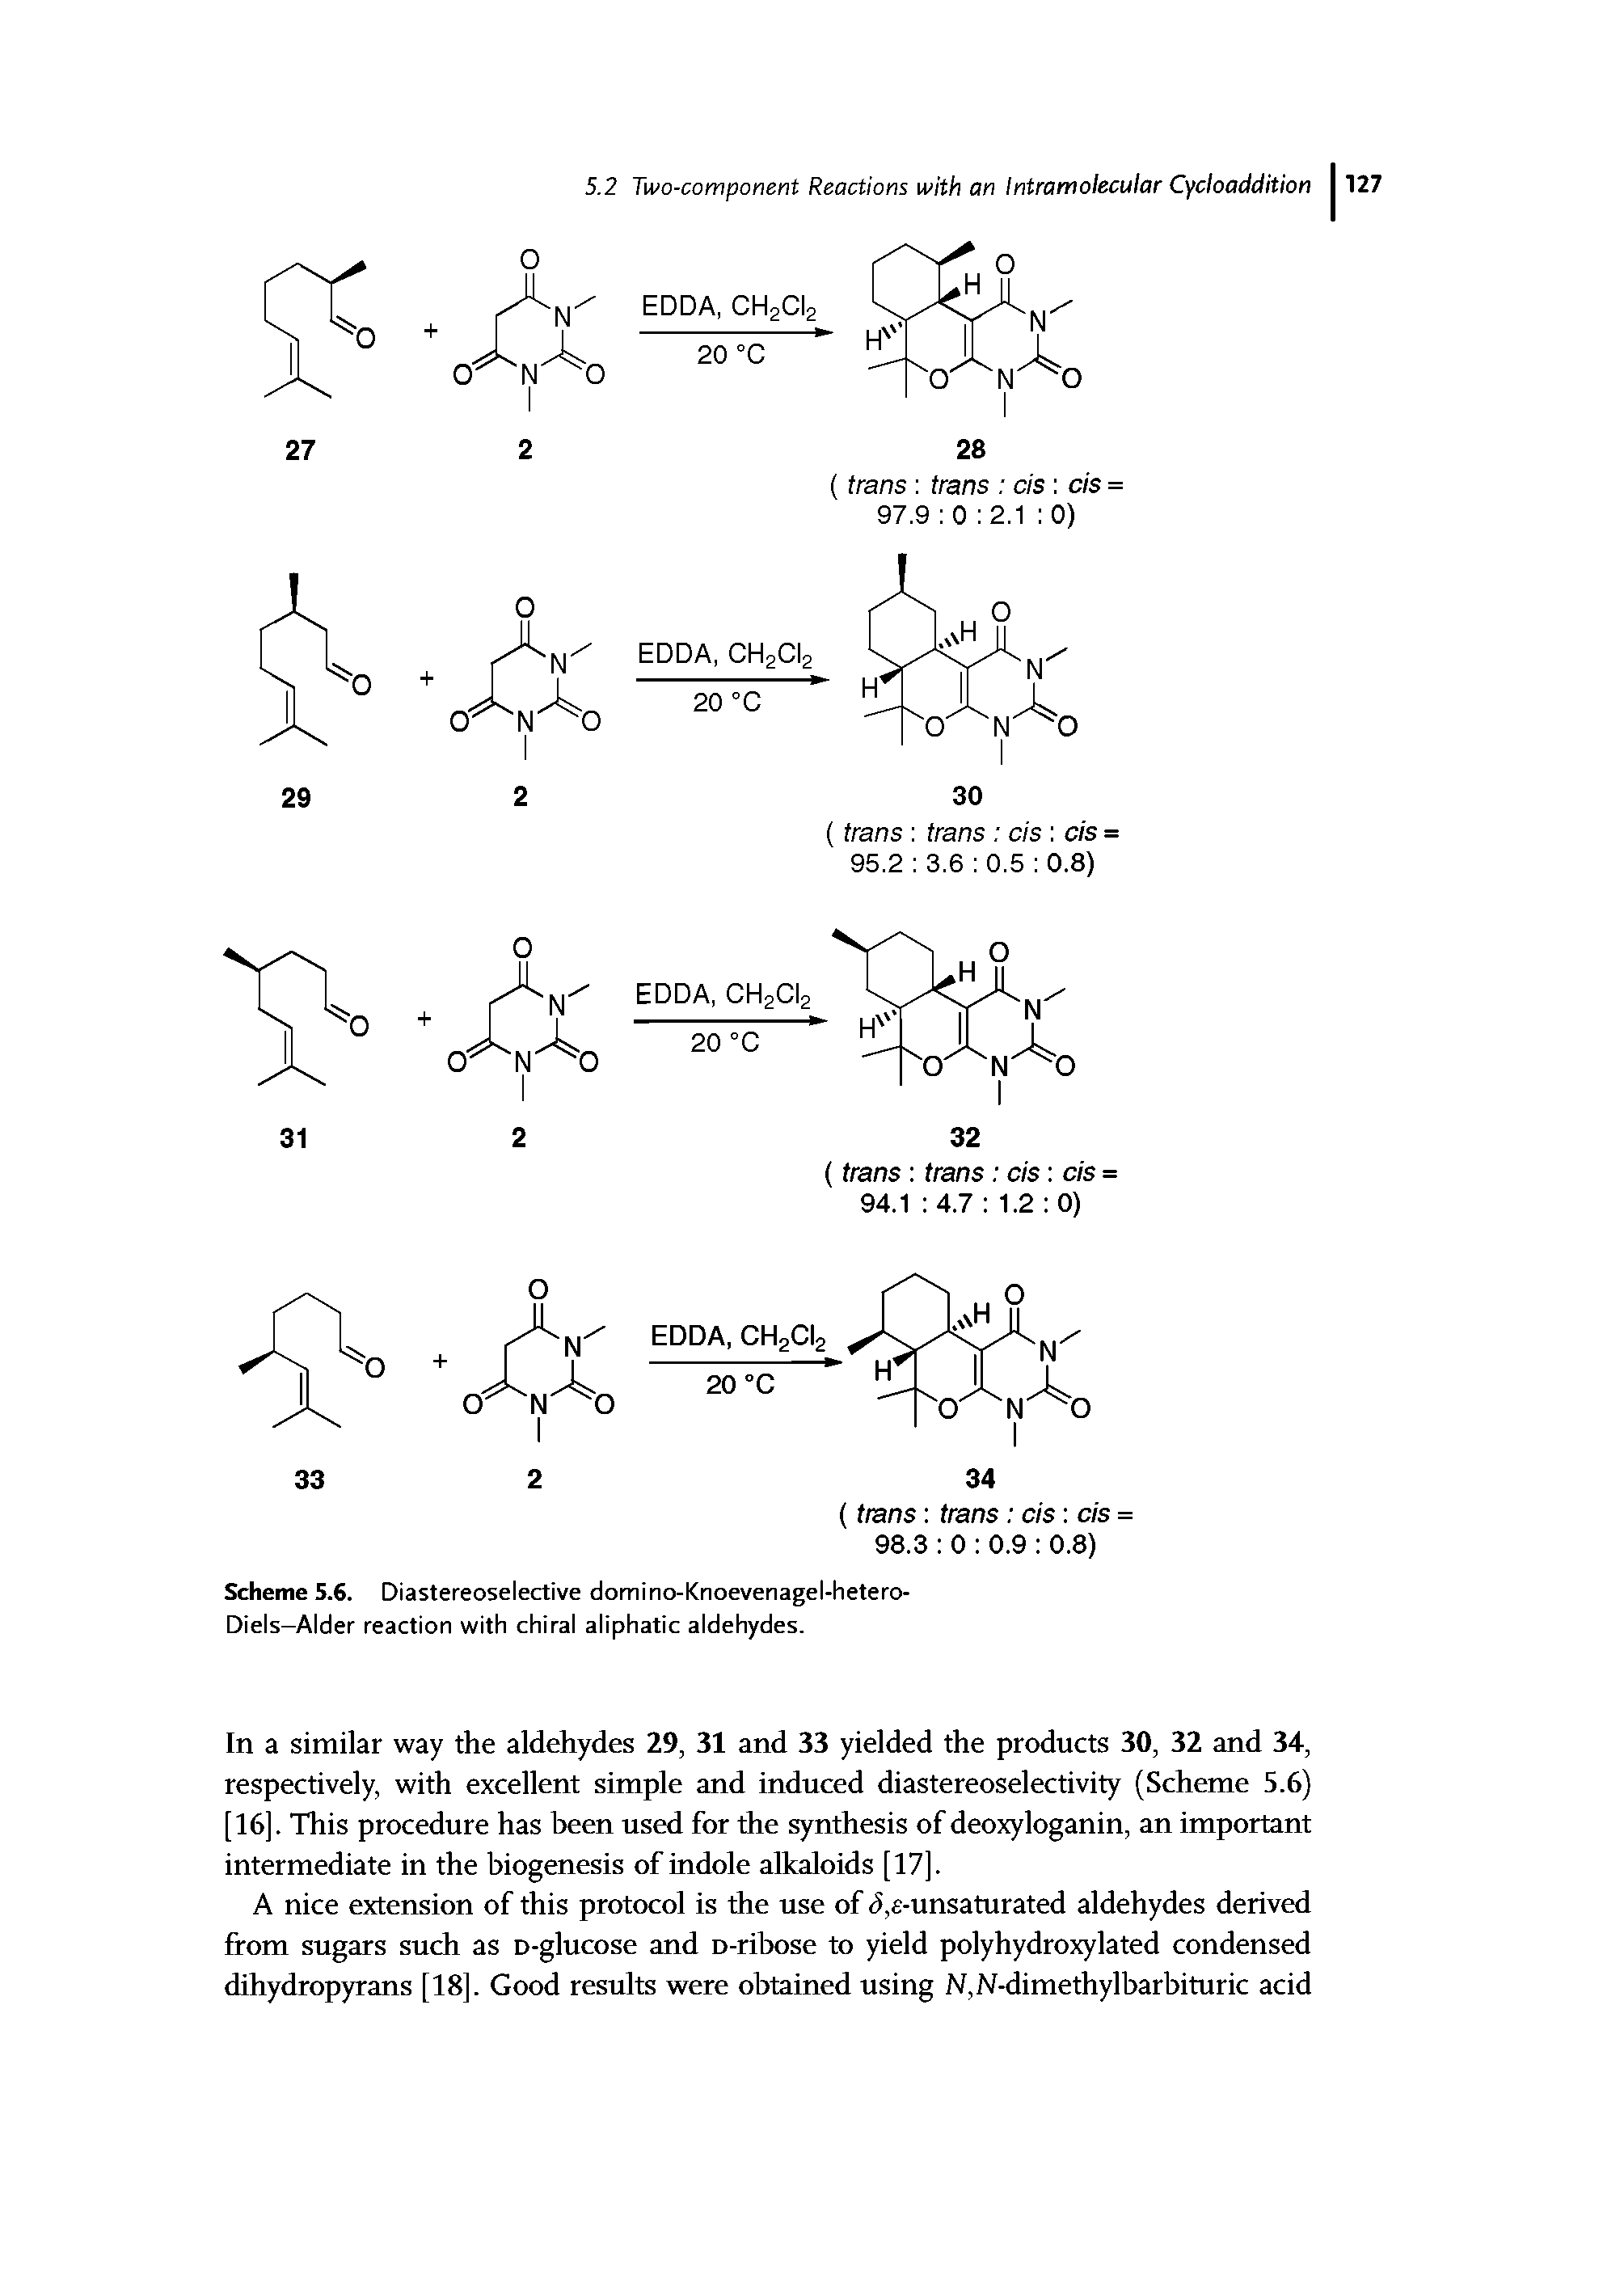 Scheme 5.6. Diastereoselective domino-Knoevenagel-hetero-Diels—Alder reaction with chiral aliphatic aldehydes.